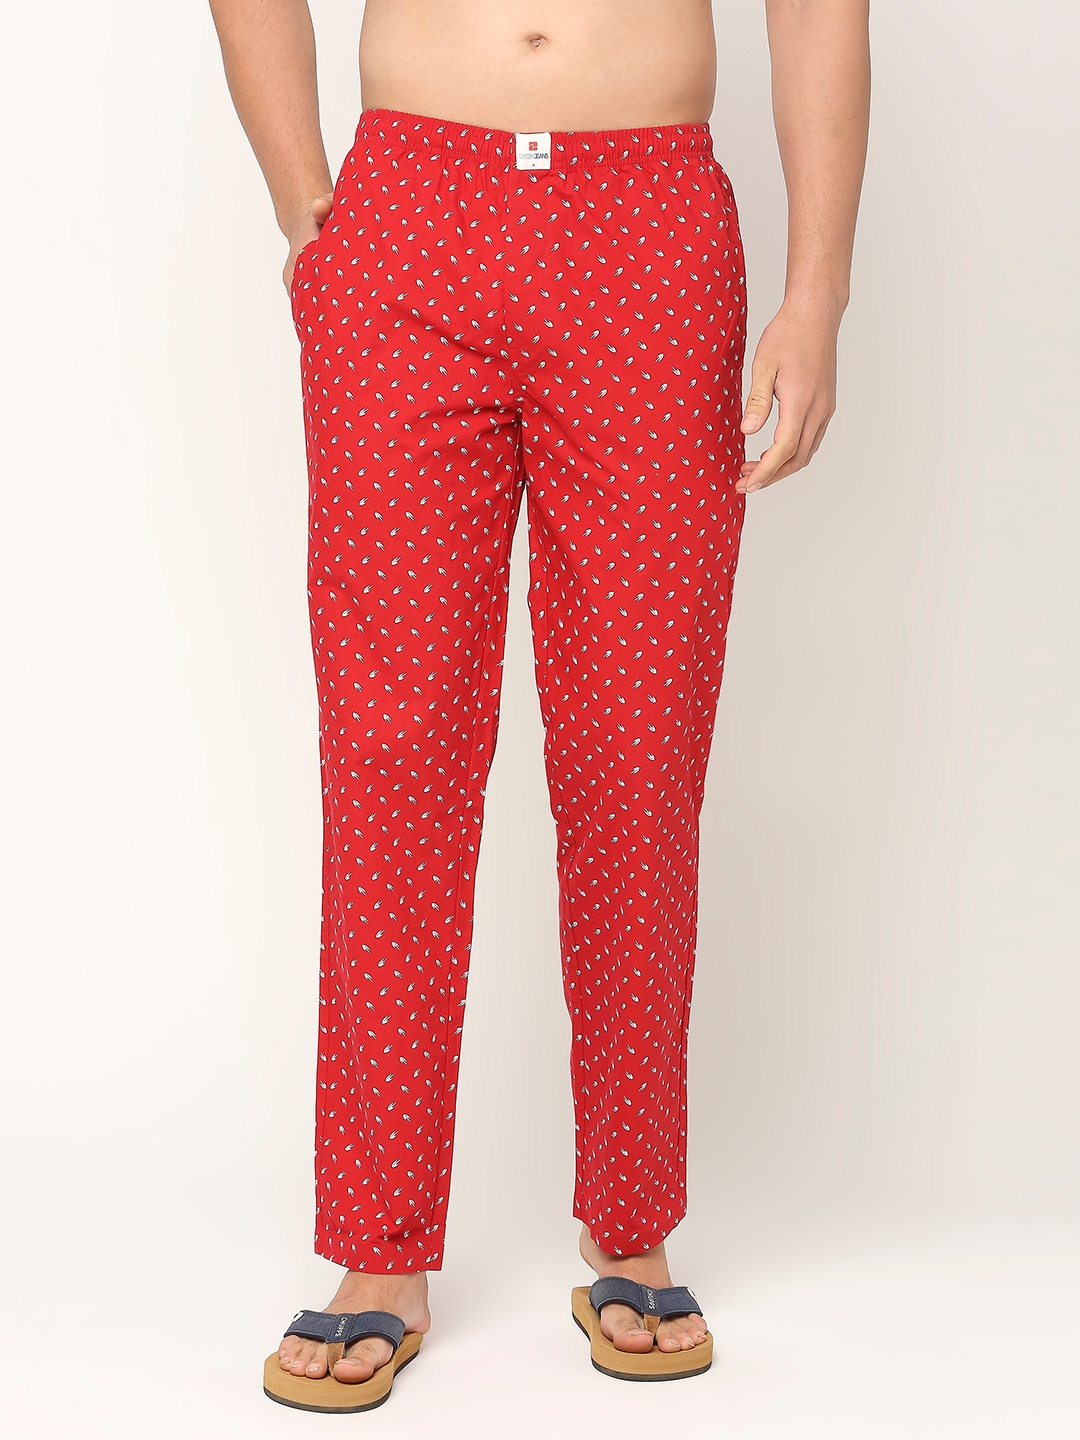 spykar | Underjeans by Spykar Premium Cotton Printed Men Red Pyjama